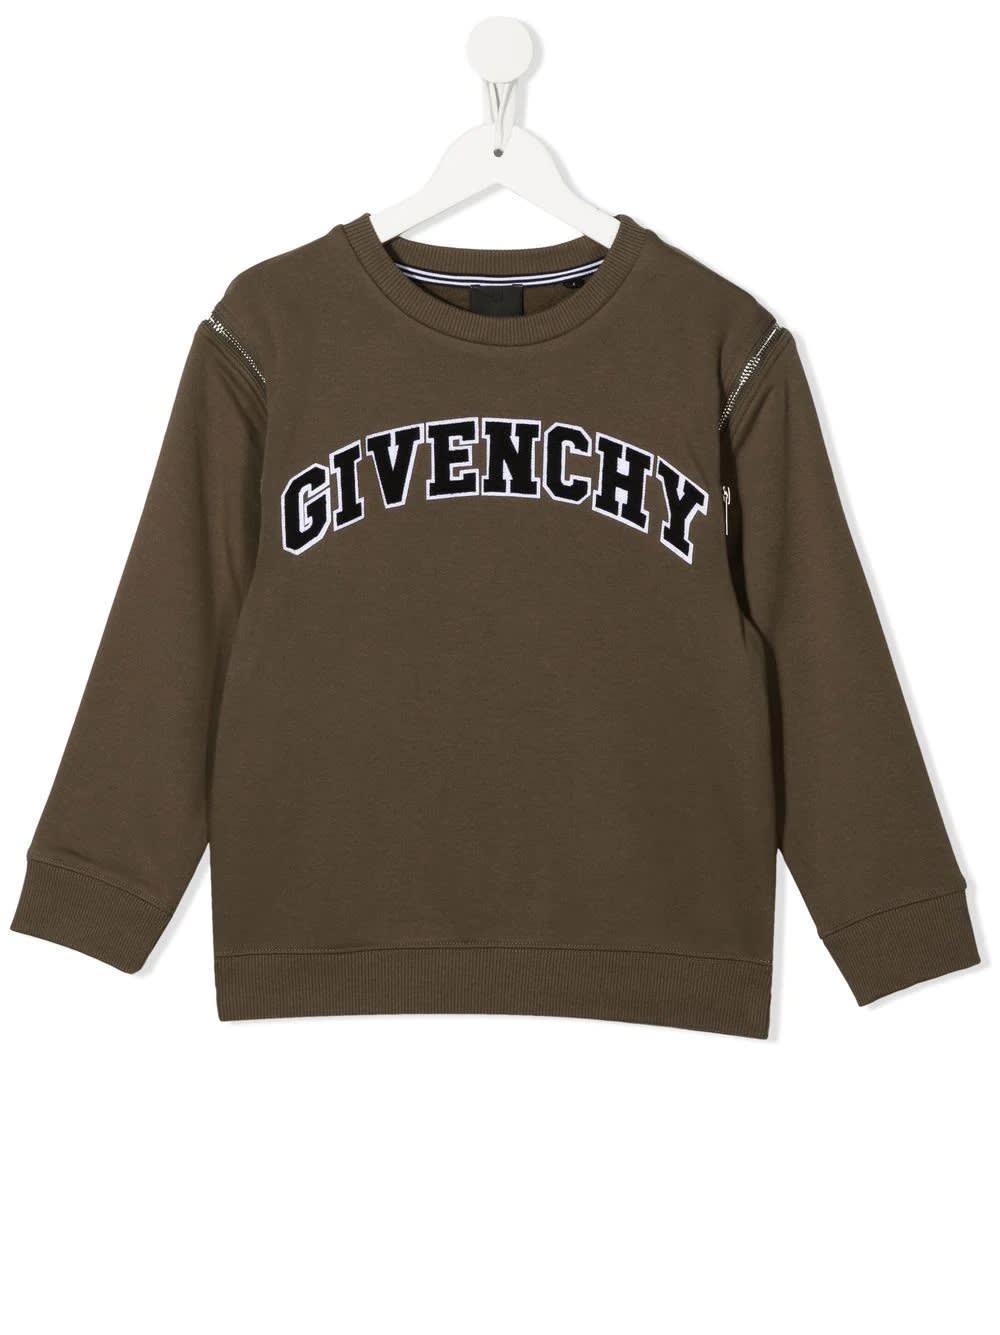 Khaki Sweatshirt With Givenchy Old School Print